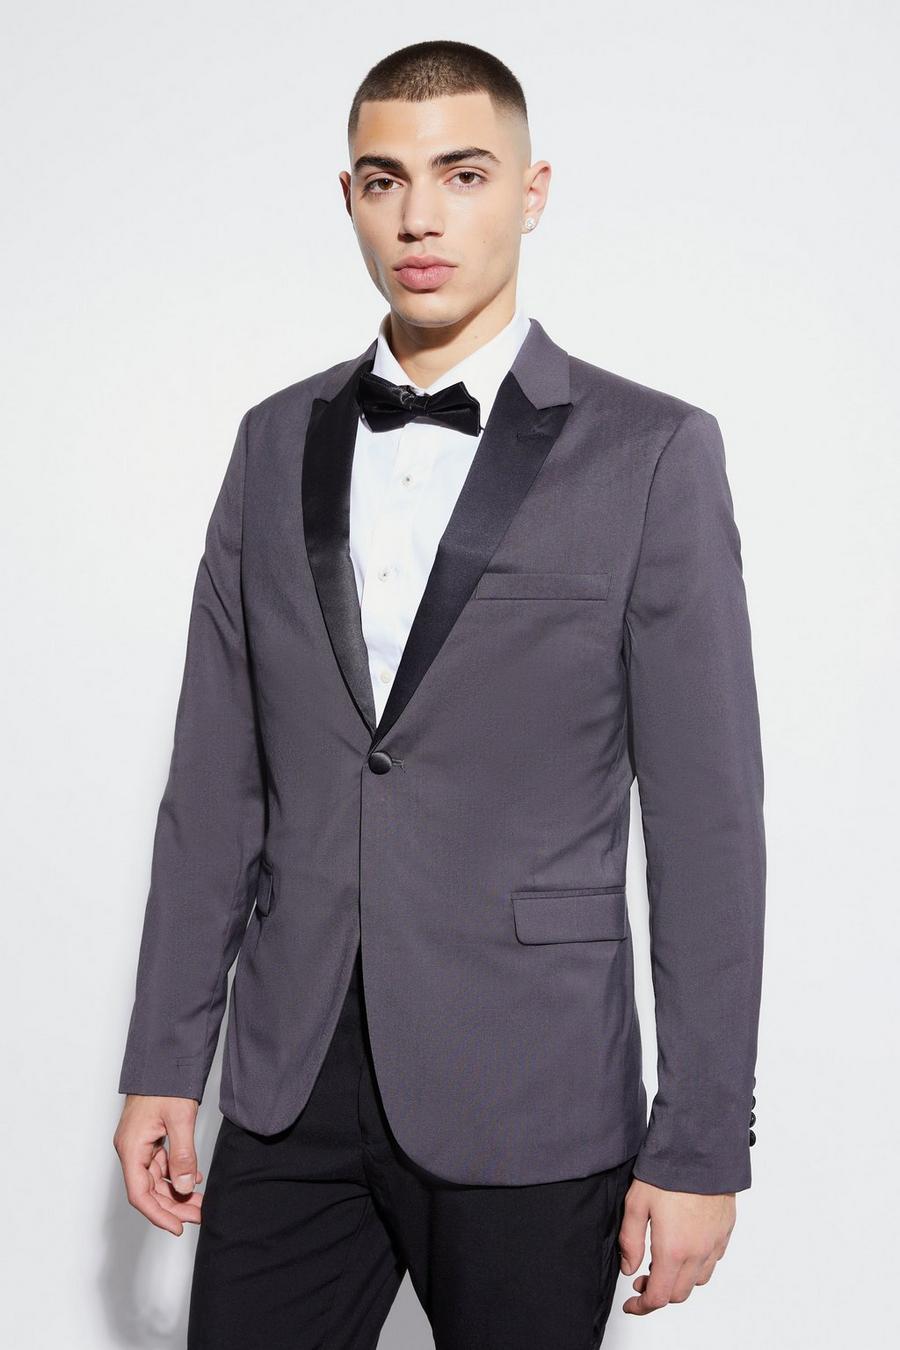 Charcoal grey Skinny Tuxedo Single Breasted Suit Jacket